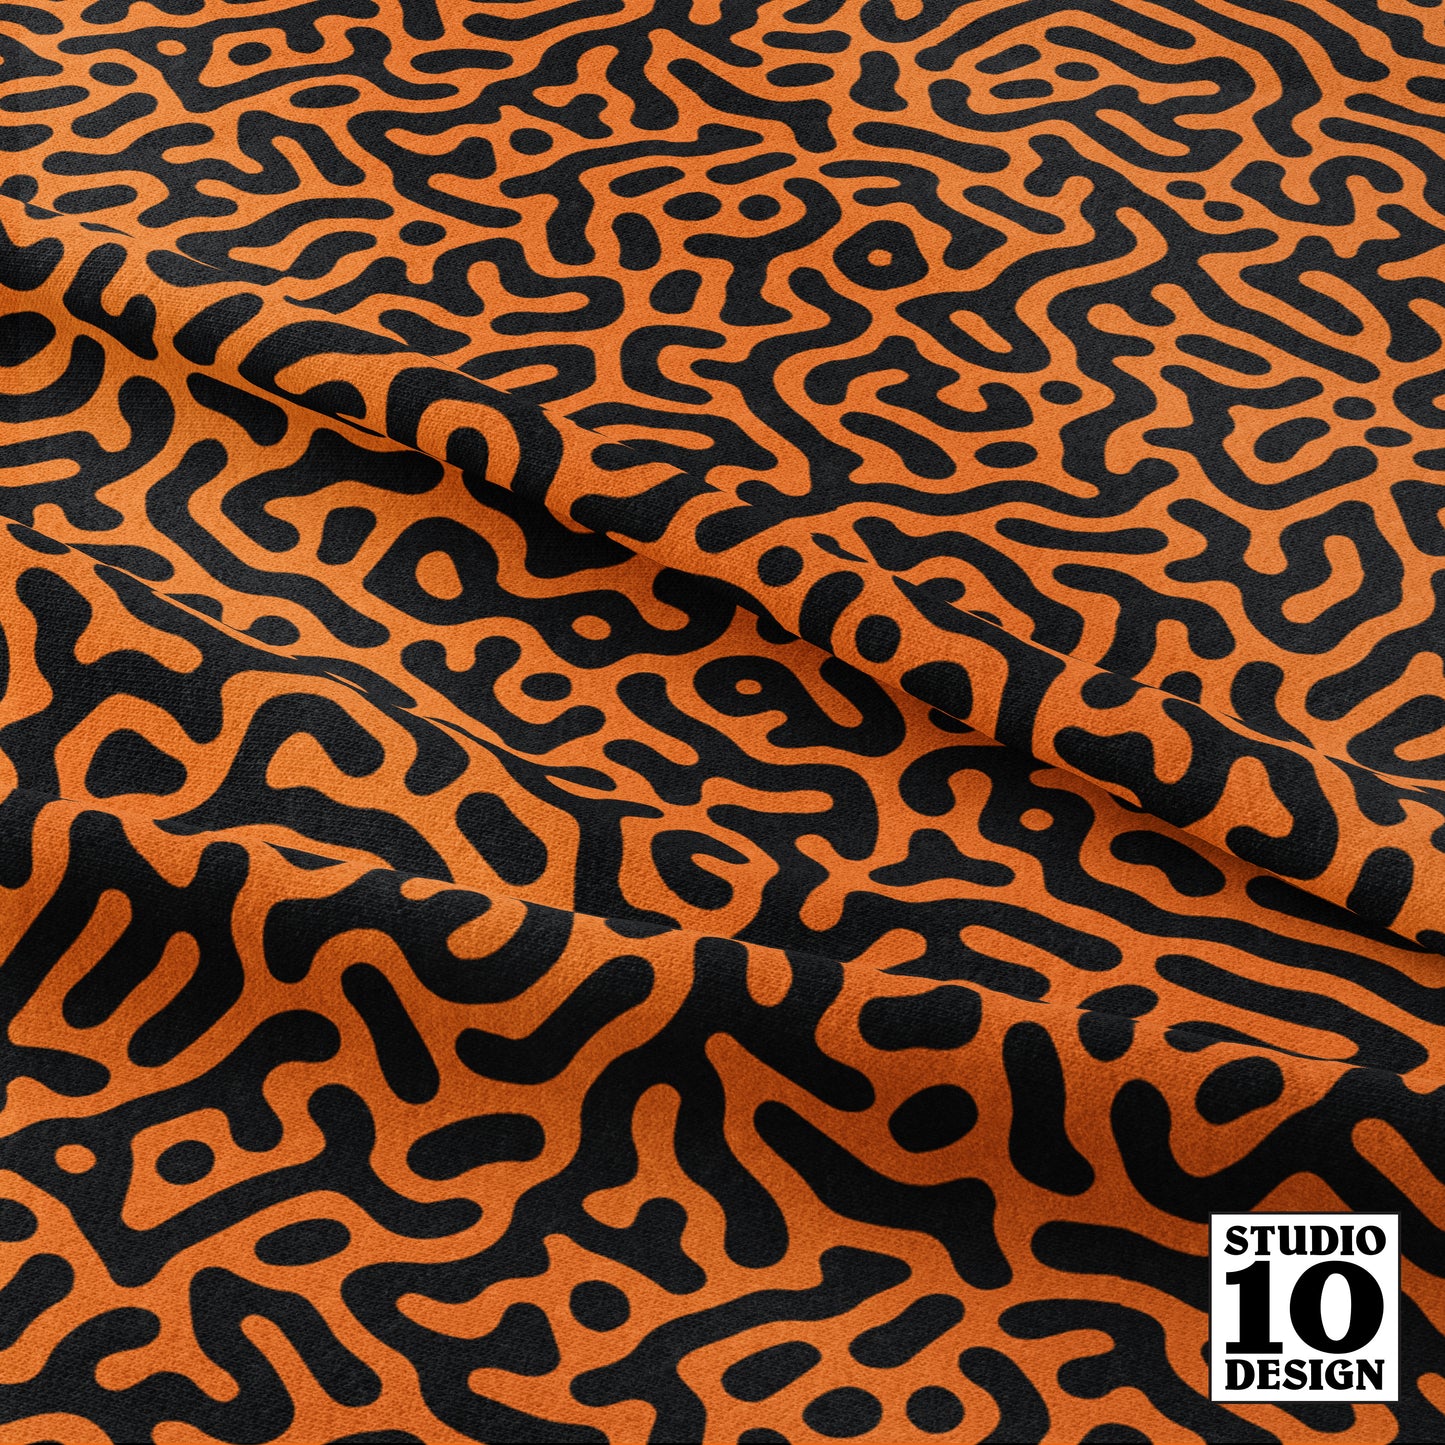 Turing Pattern I: Black + Carrot Printed Fabric by Studio Ten Design